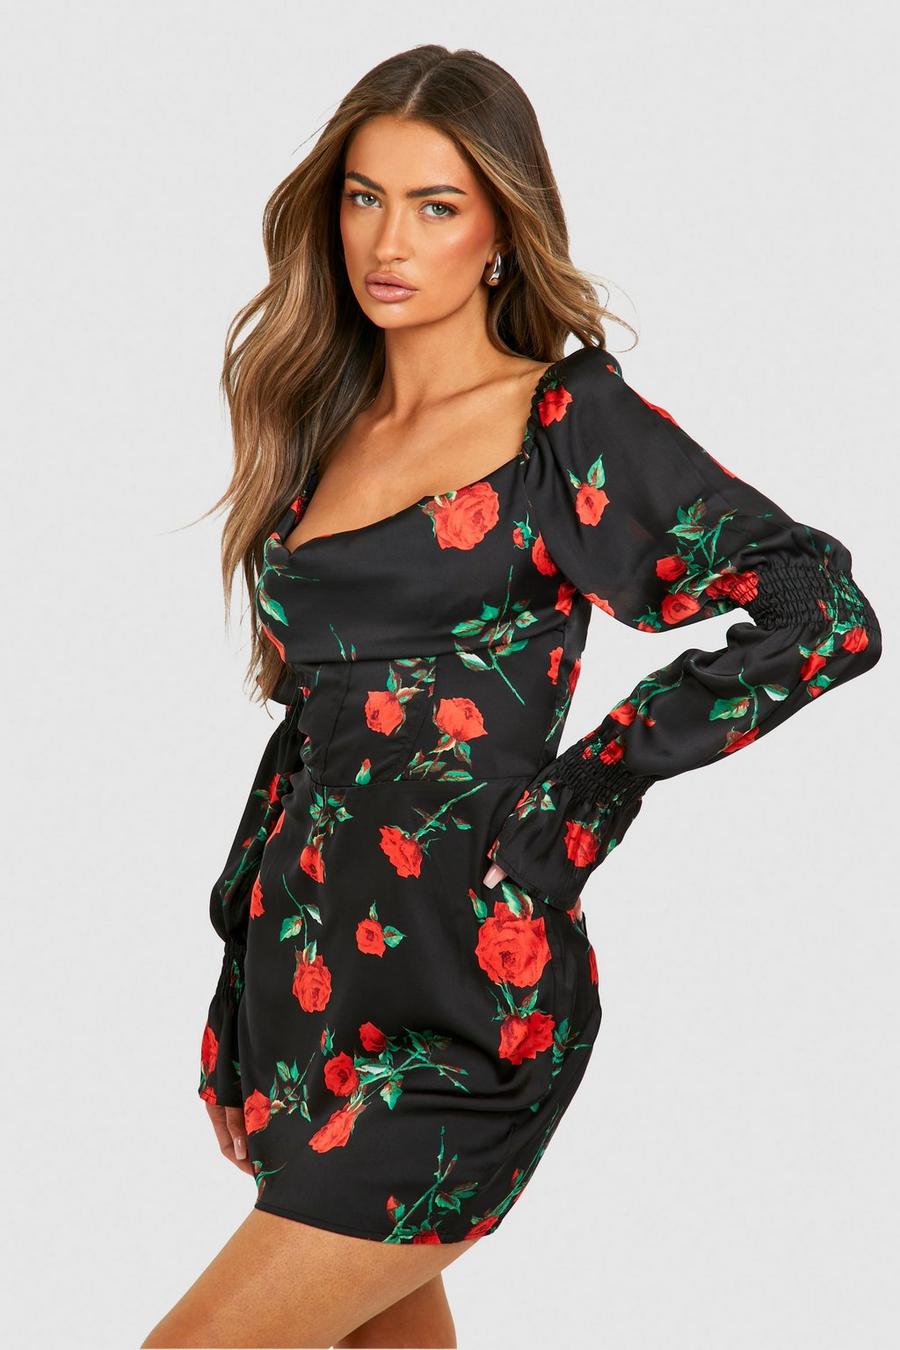 Textured Chiffon Pleated Dress, Navy Floral – Jolie Moi Retail